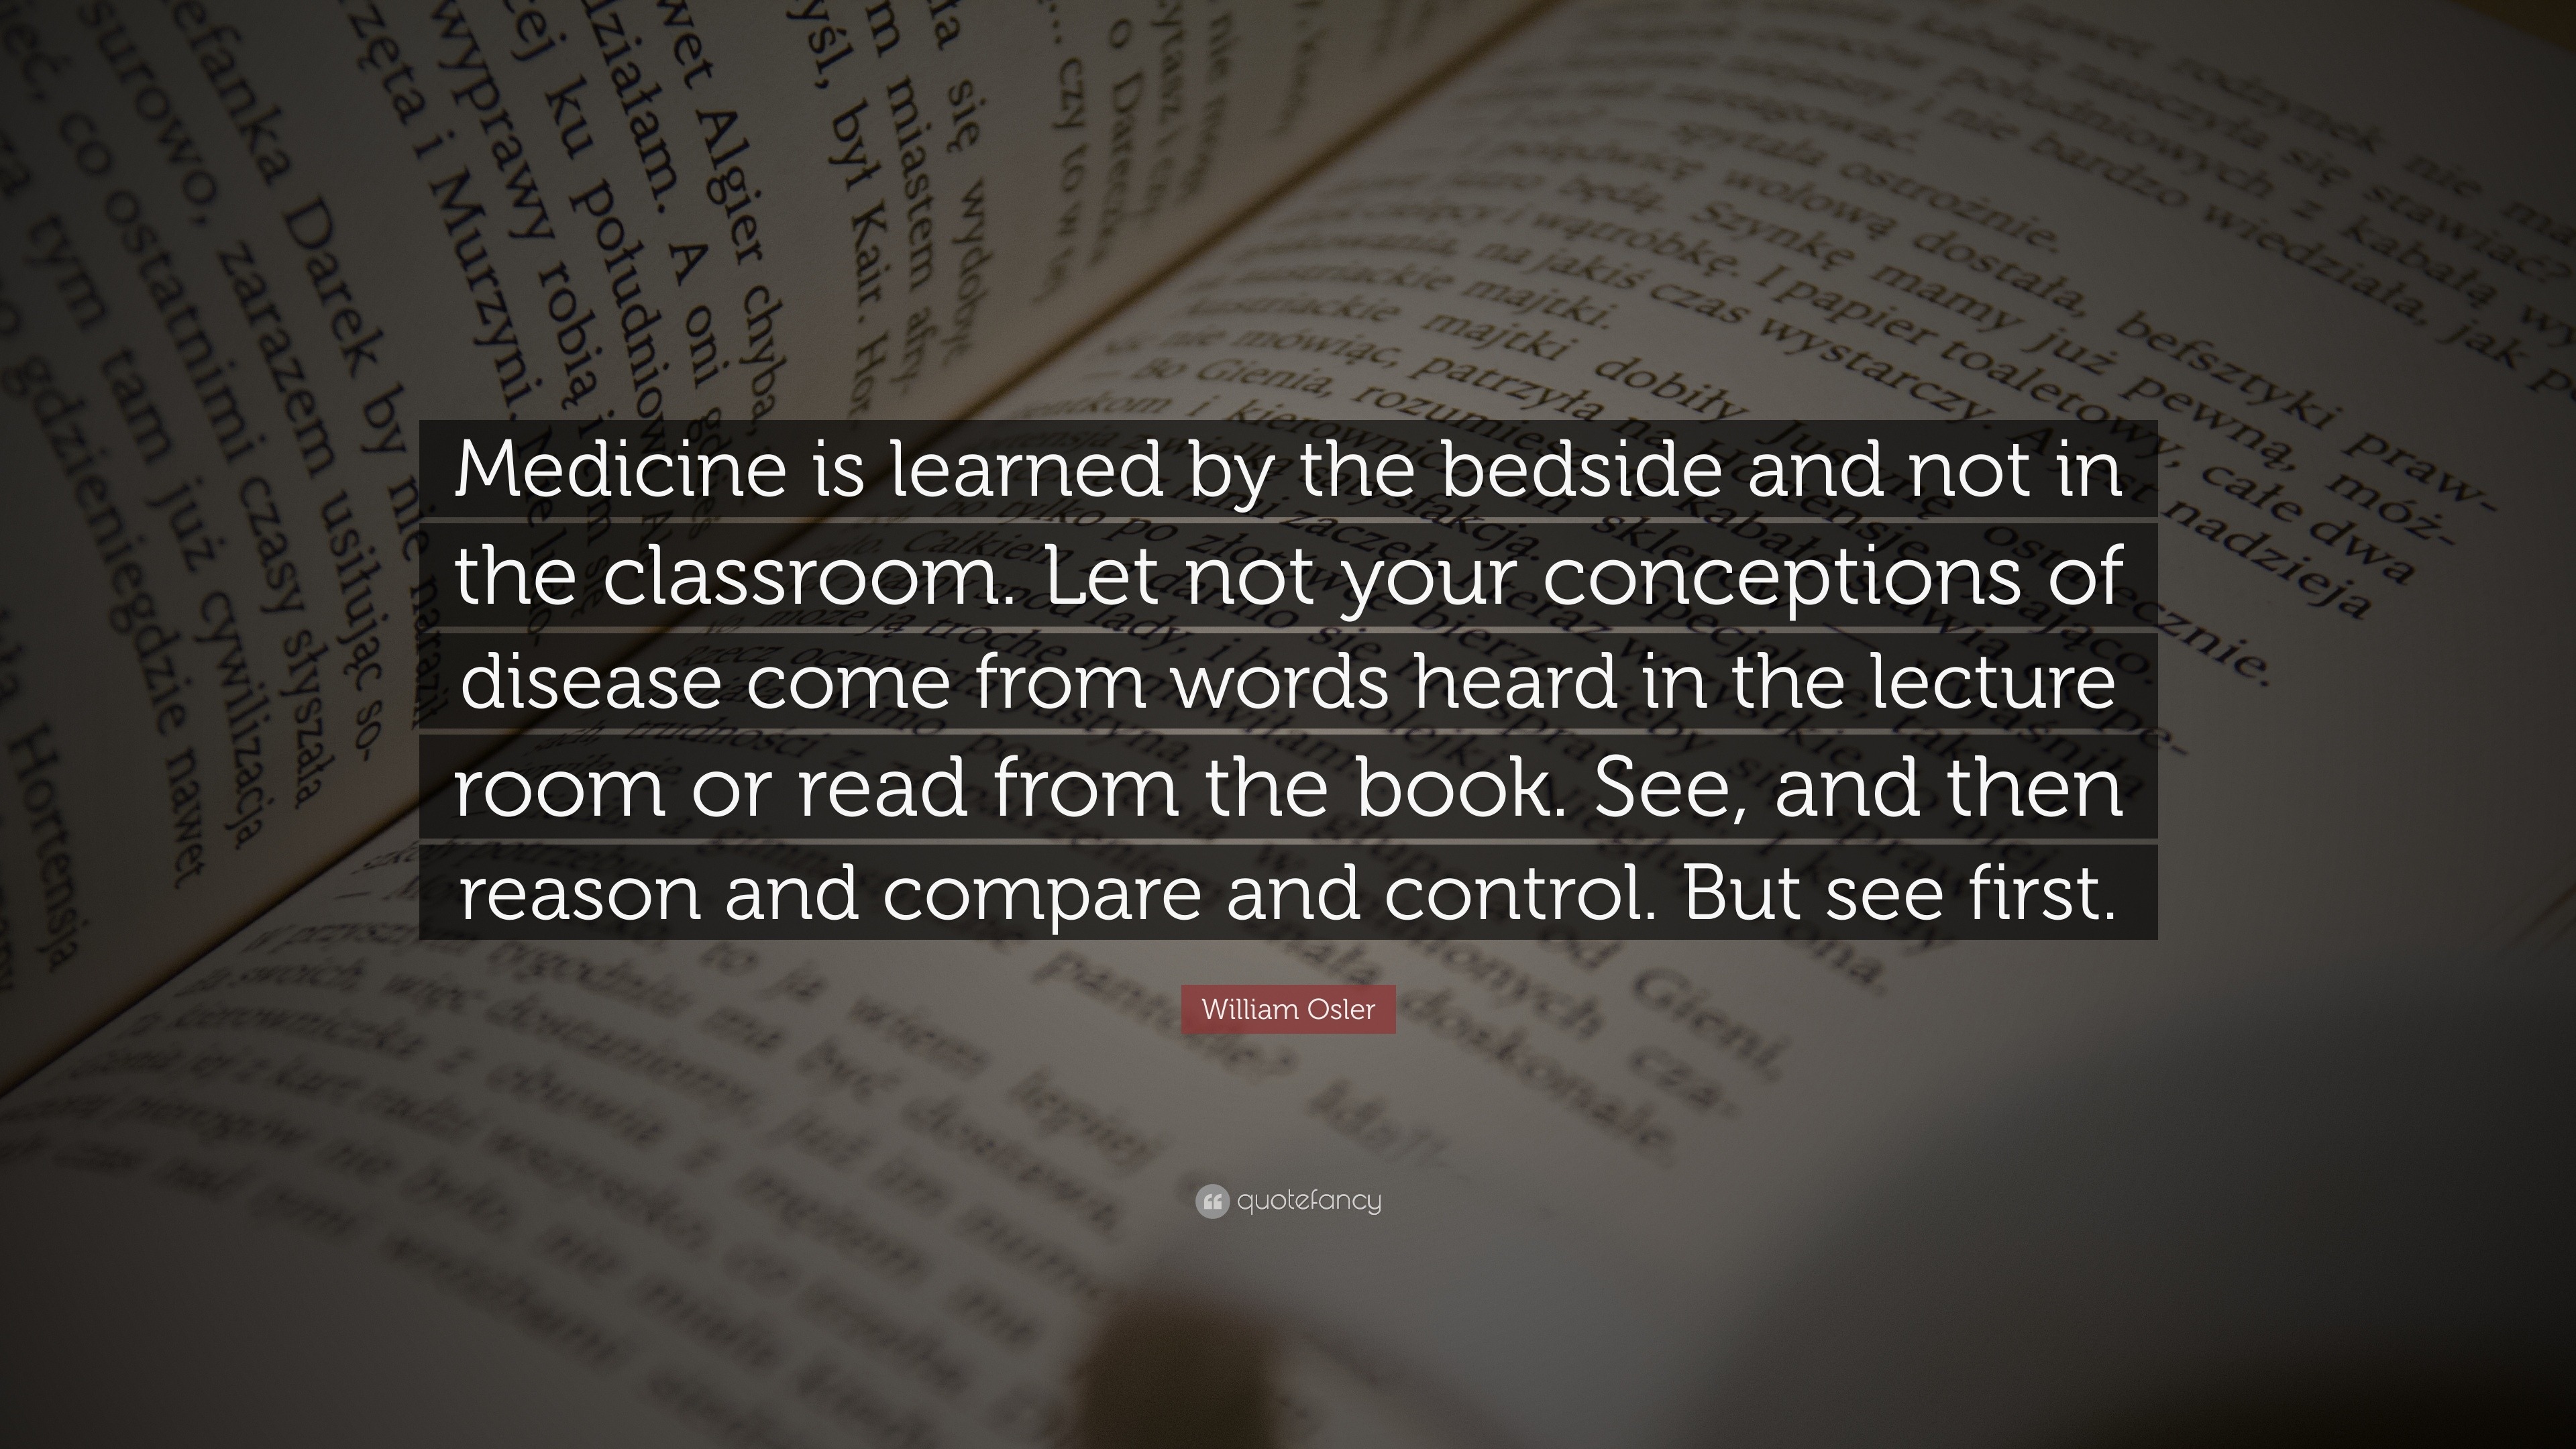 William Osler A Life in Medicine Epub-Ebook